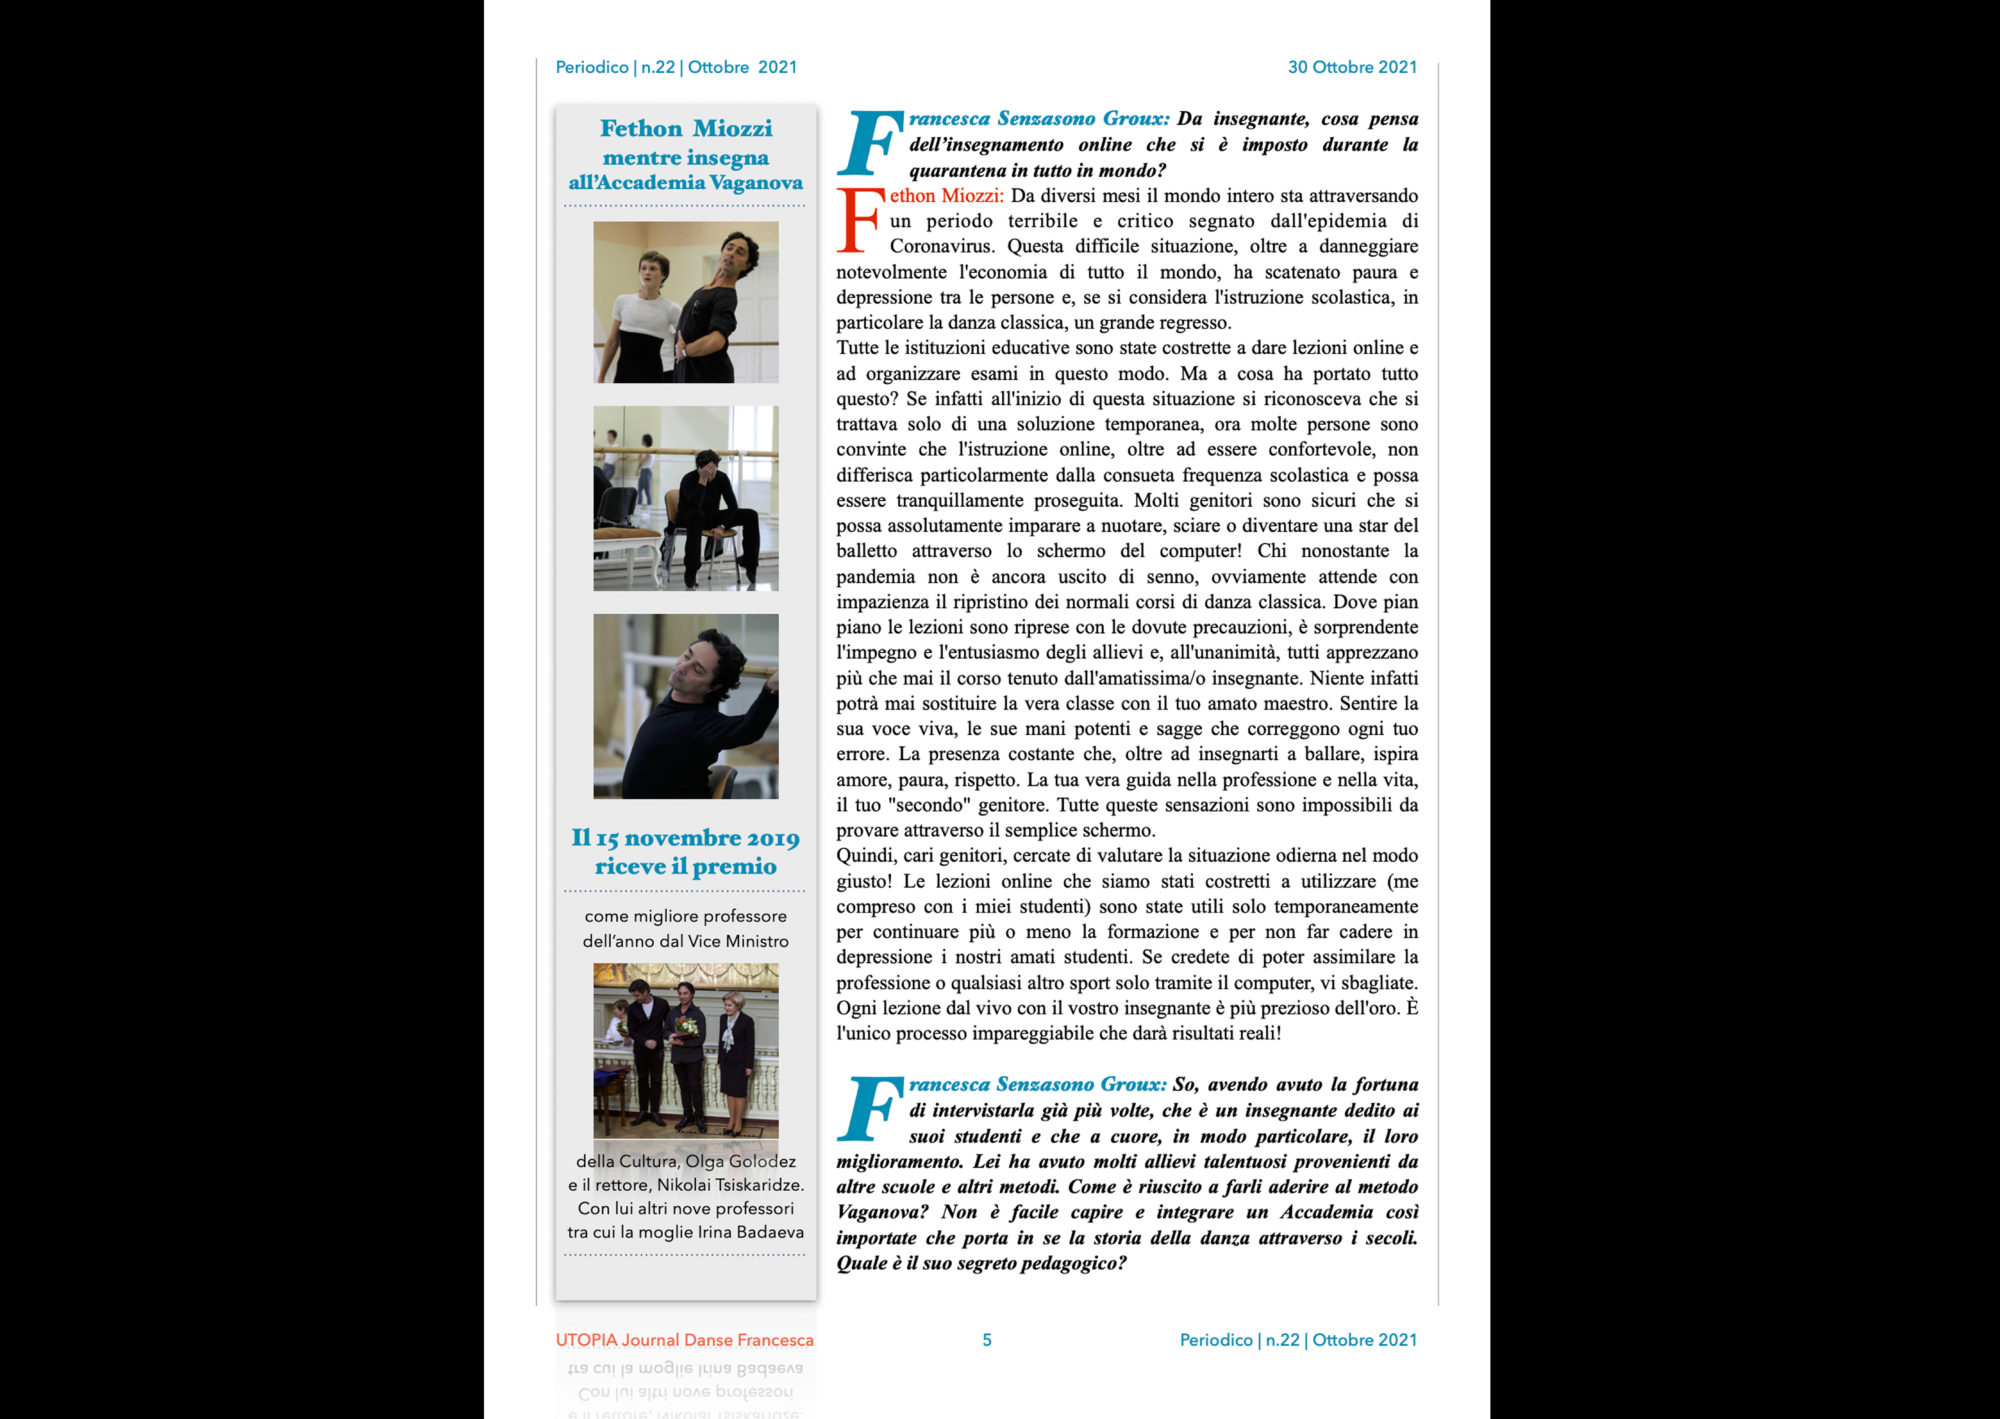 ©UTOPIA Journal Danse Francesca Periodico n° 22 29 Ottobre 2021 pagina 5